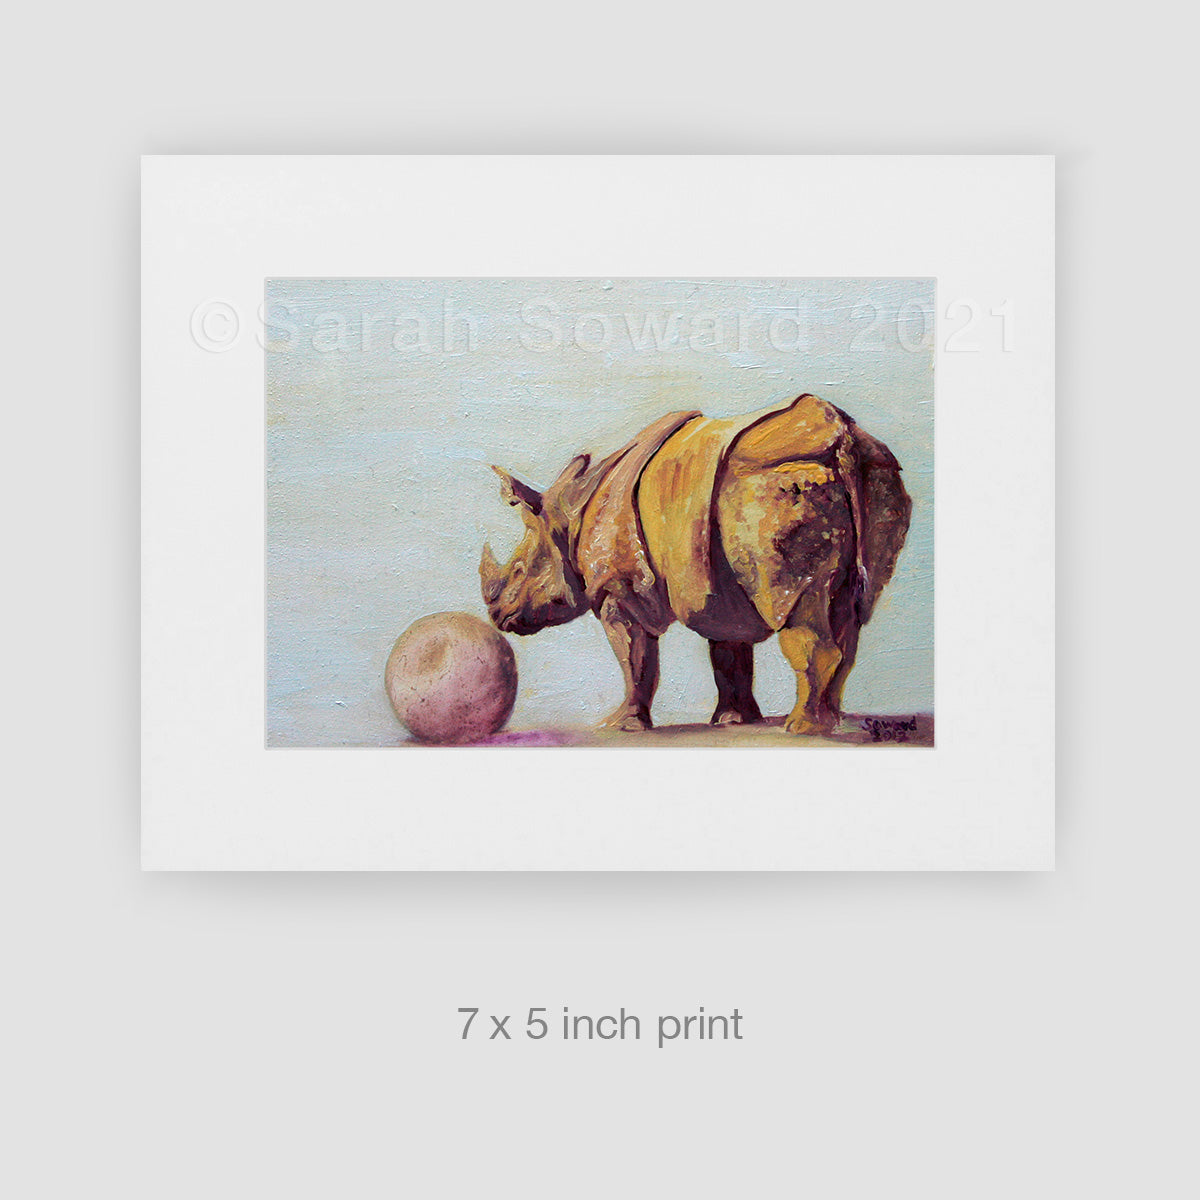 Stephan, Rhino Limited Edition Print